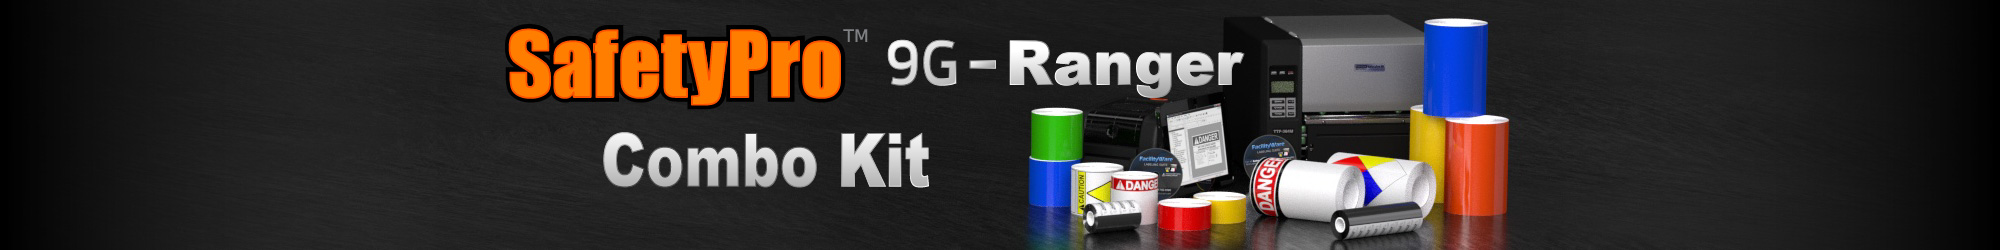 SafetyPro 9G Ranger Combo Kit